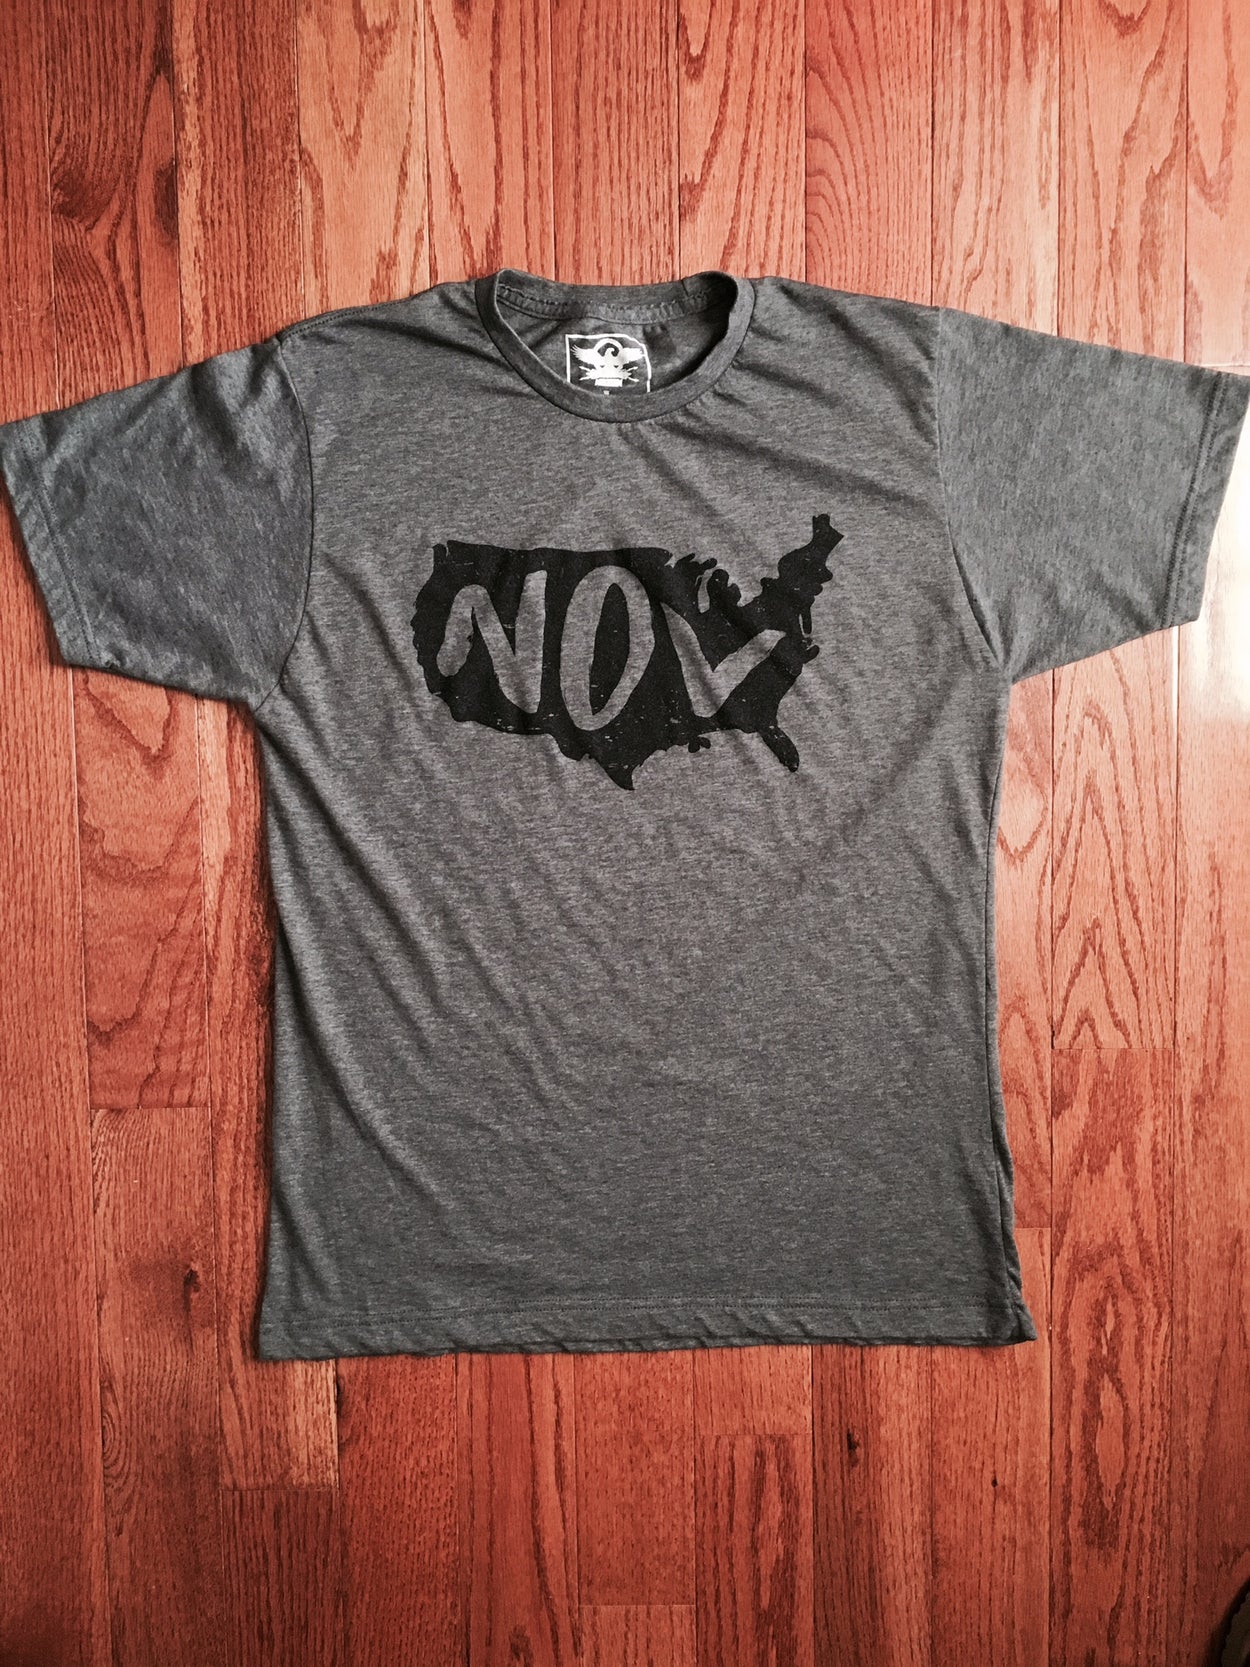 N.O.V. America Shirt - JimWendler.com 